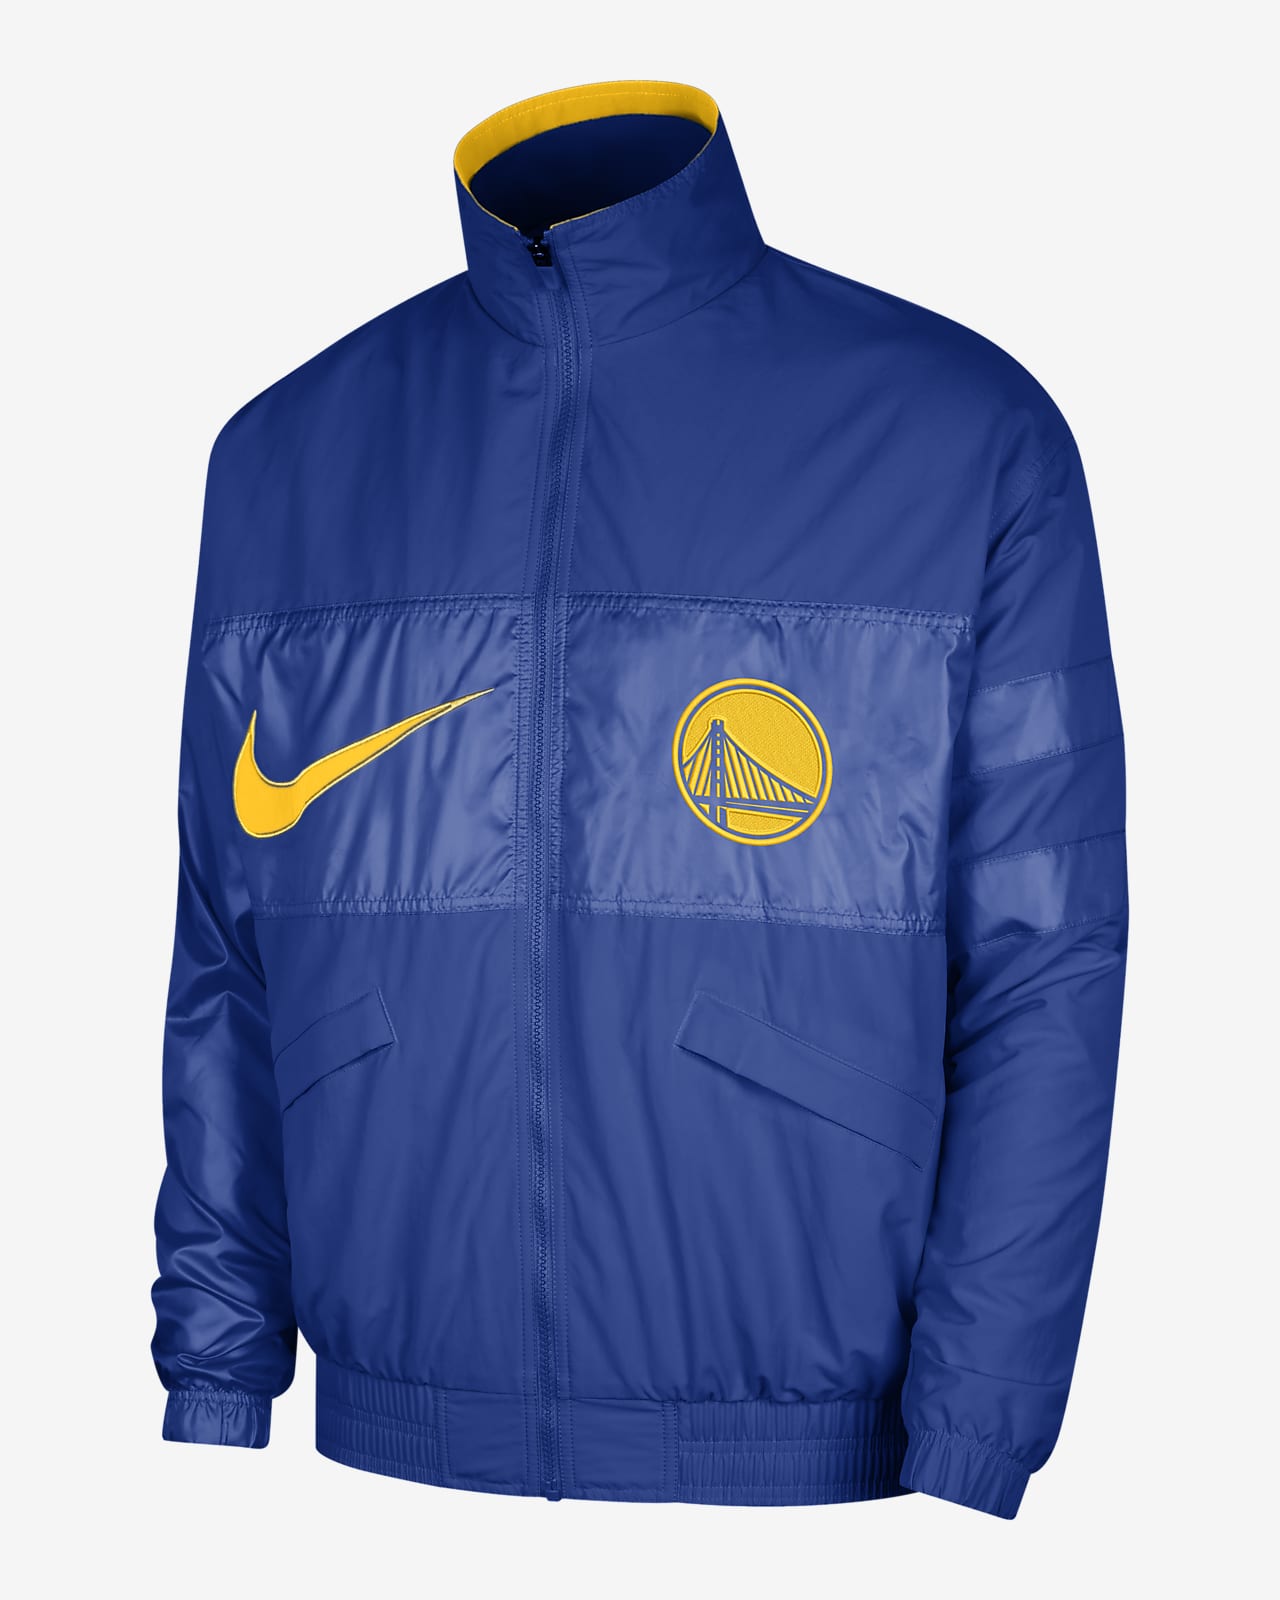 Nike Men's Golden State Warriors Blue Courtside Lightweight Jacket, Small